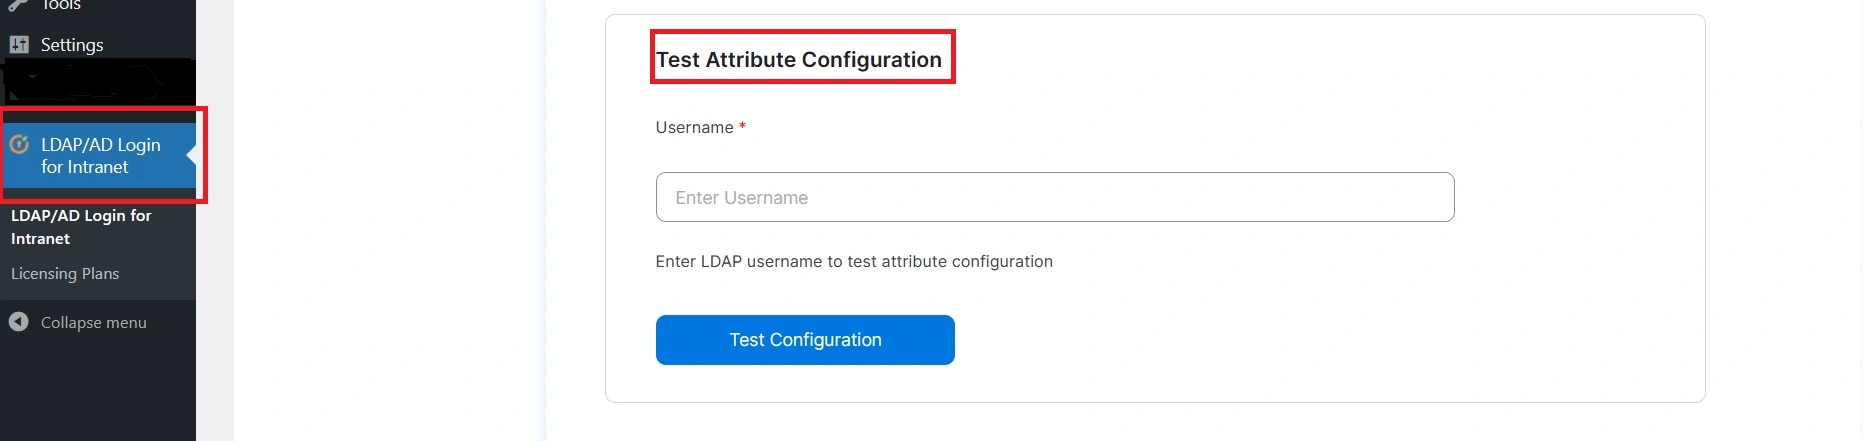 miniOrange Active Directory Integration LDAP Integration LDAP User Mapping Configuration and test attribute